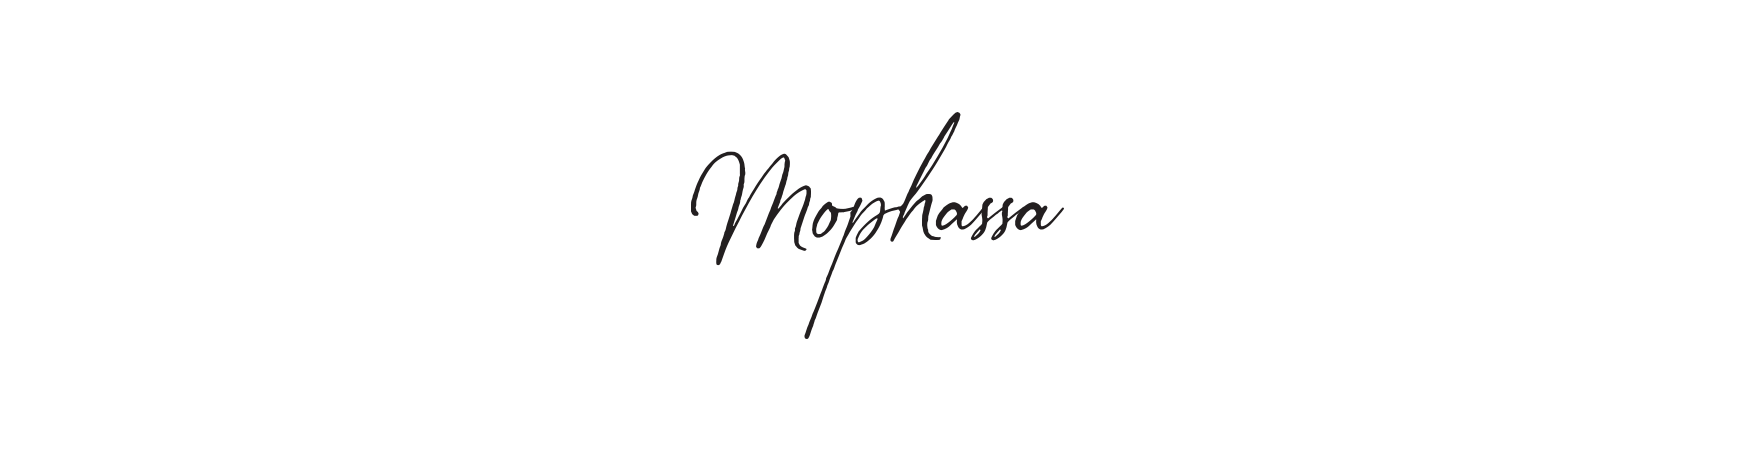 Mophassa